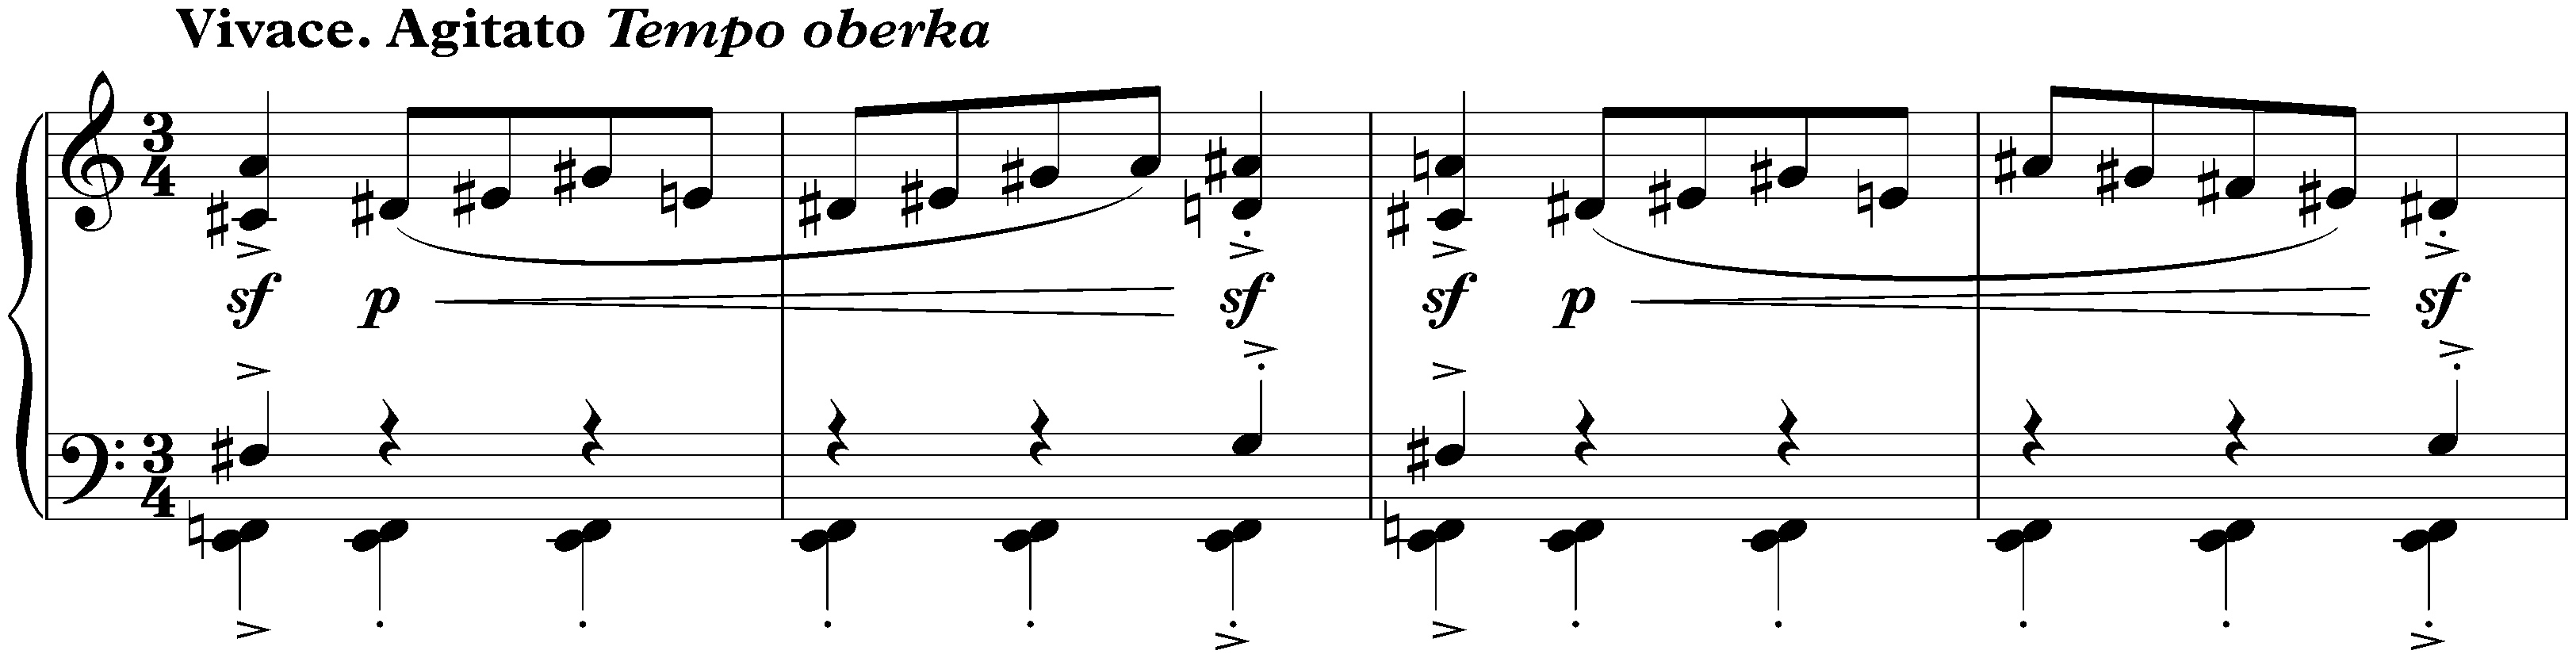 Twenty Mazurkas, op. 50; 18. Vivace. Agitato